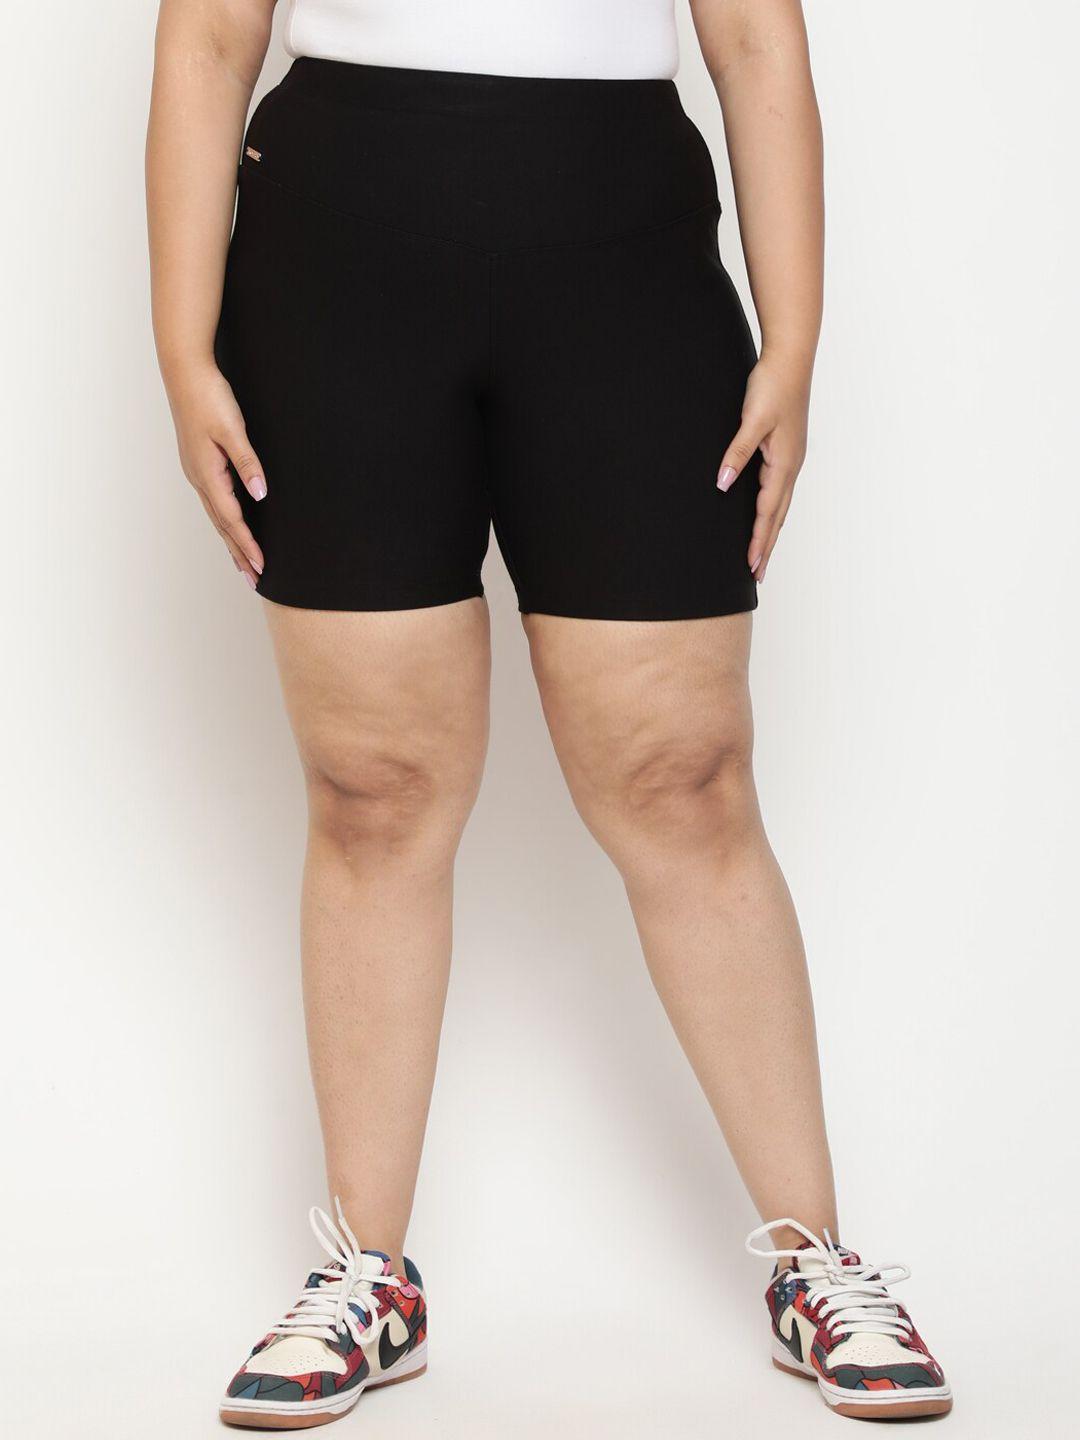 amydus women plus size high-rise shorts